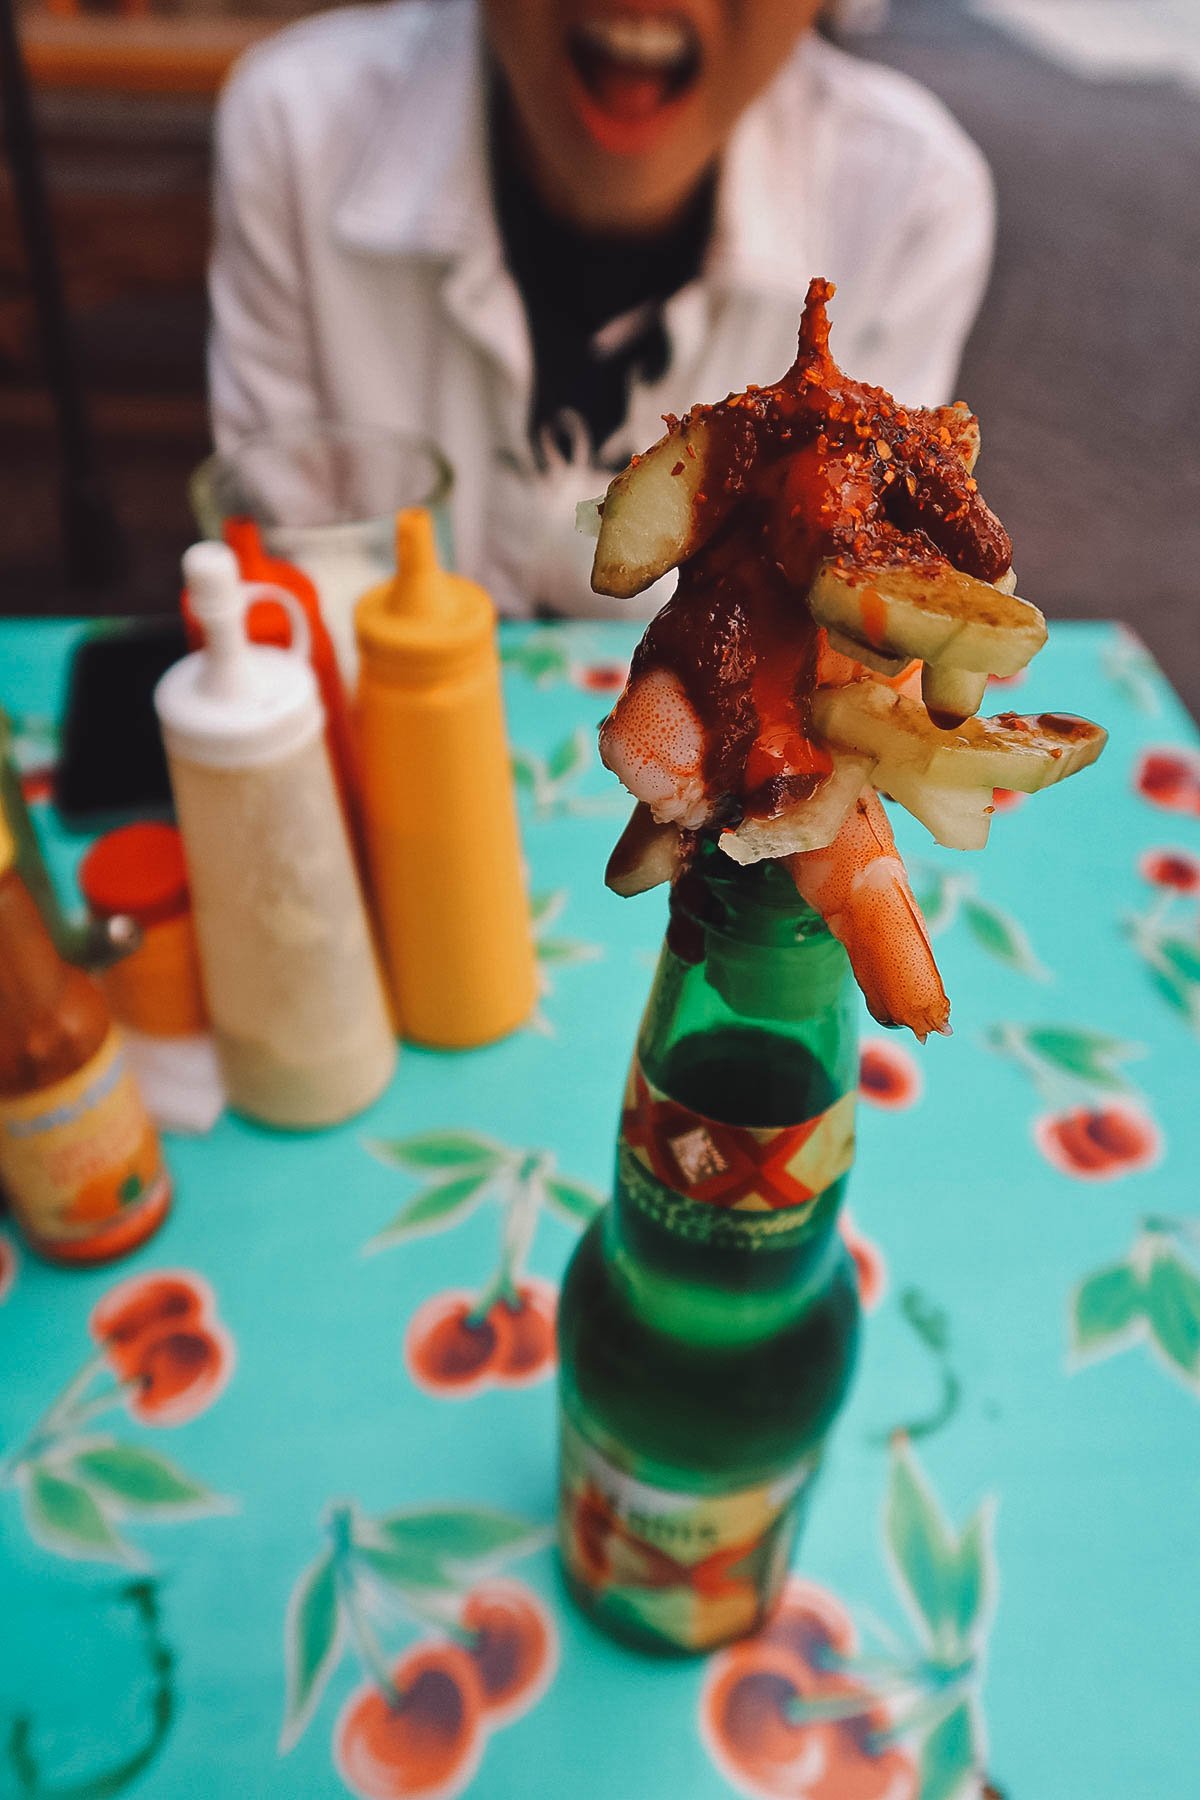 Beer bottle with skewer of shrimp at a restaurant in Guanajuato